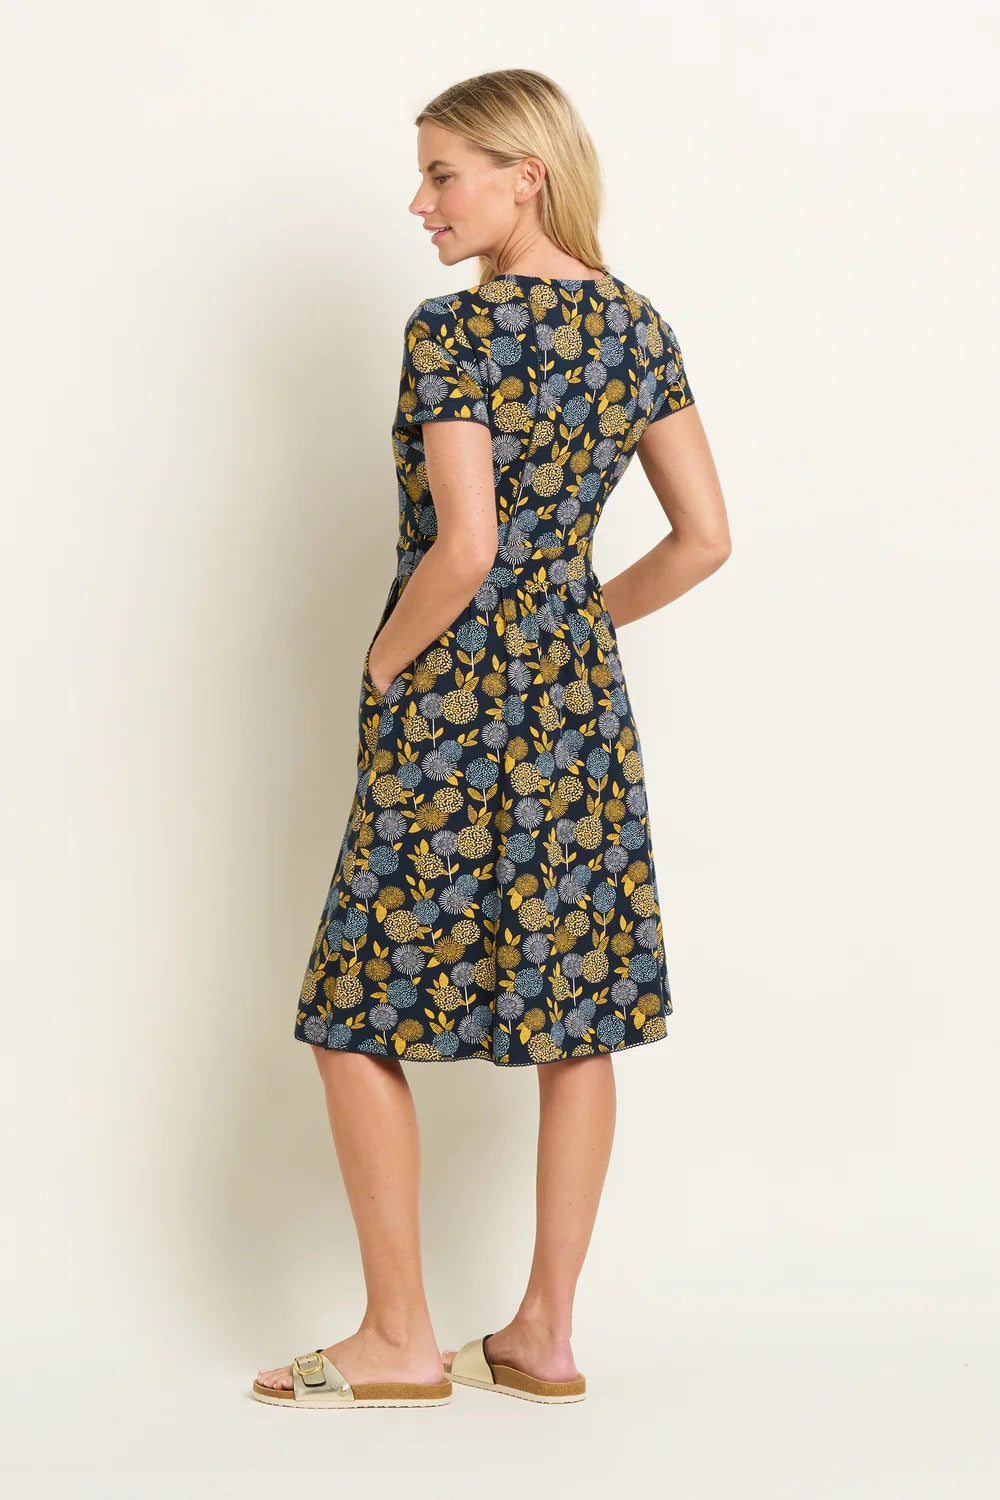 Brakeburn Women's Luna Wrap Dress - Navy/Mustard